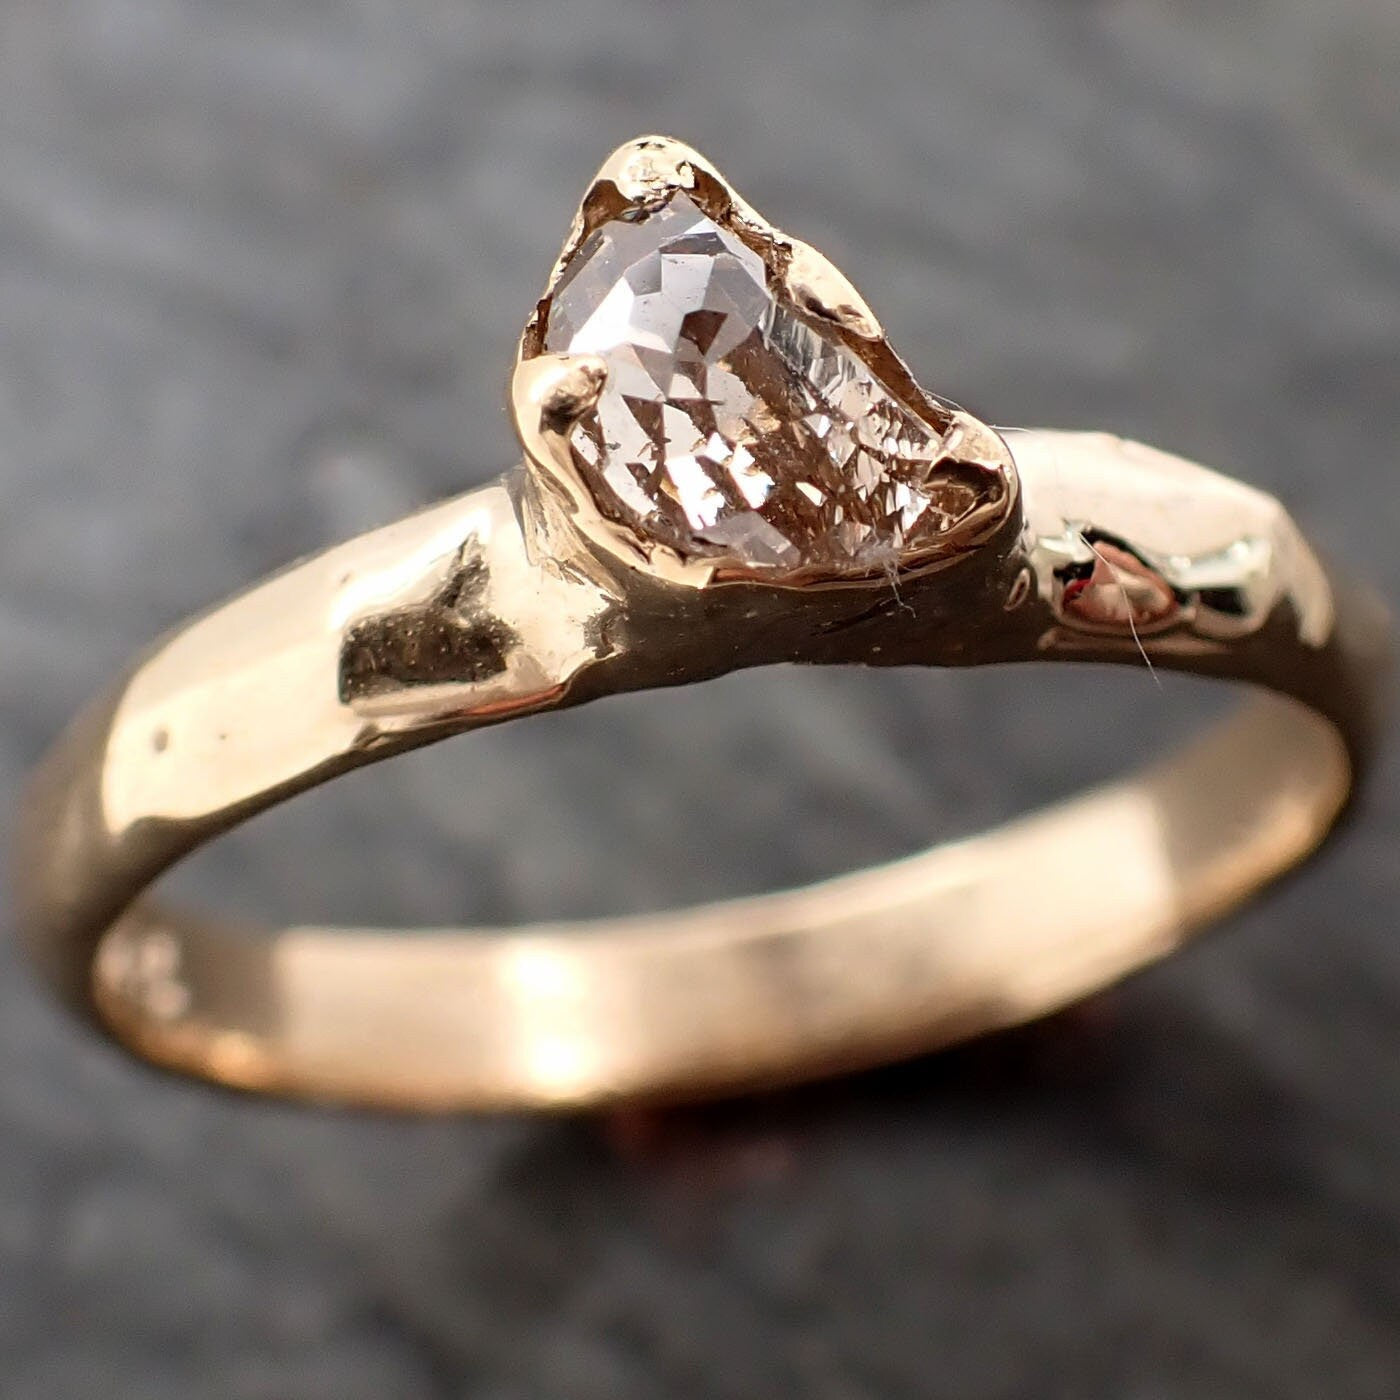 Fancy cut half moon diamond Engagement 18k Yellow Gold Solitaire Wedding Ring byAngeline 2933